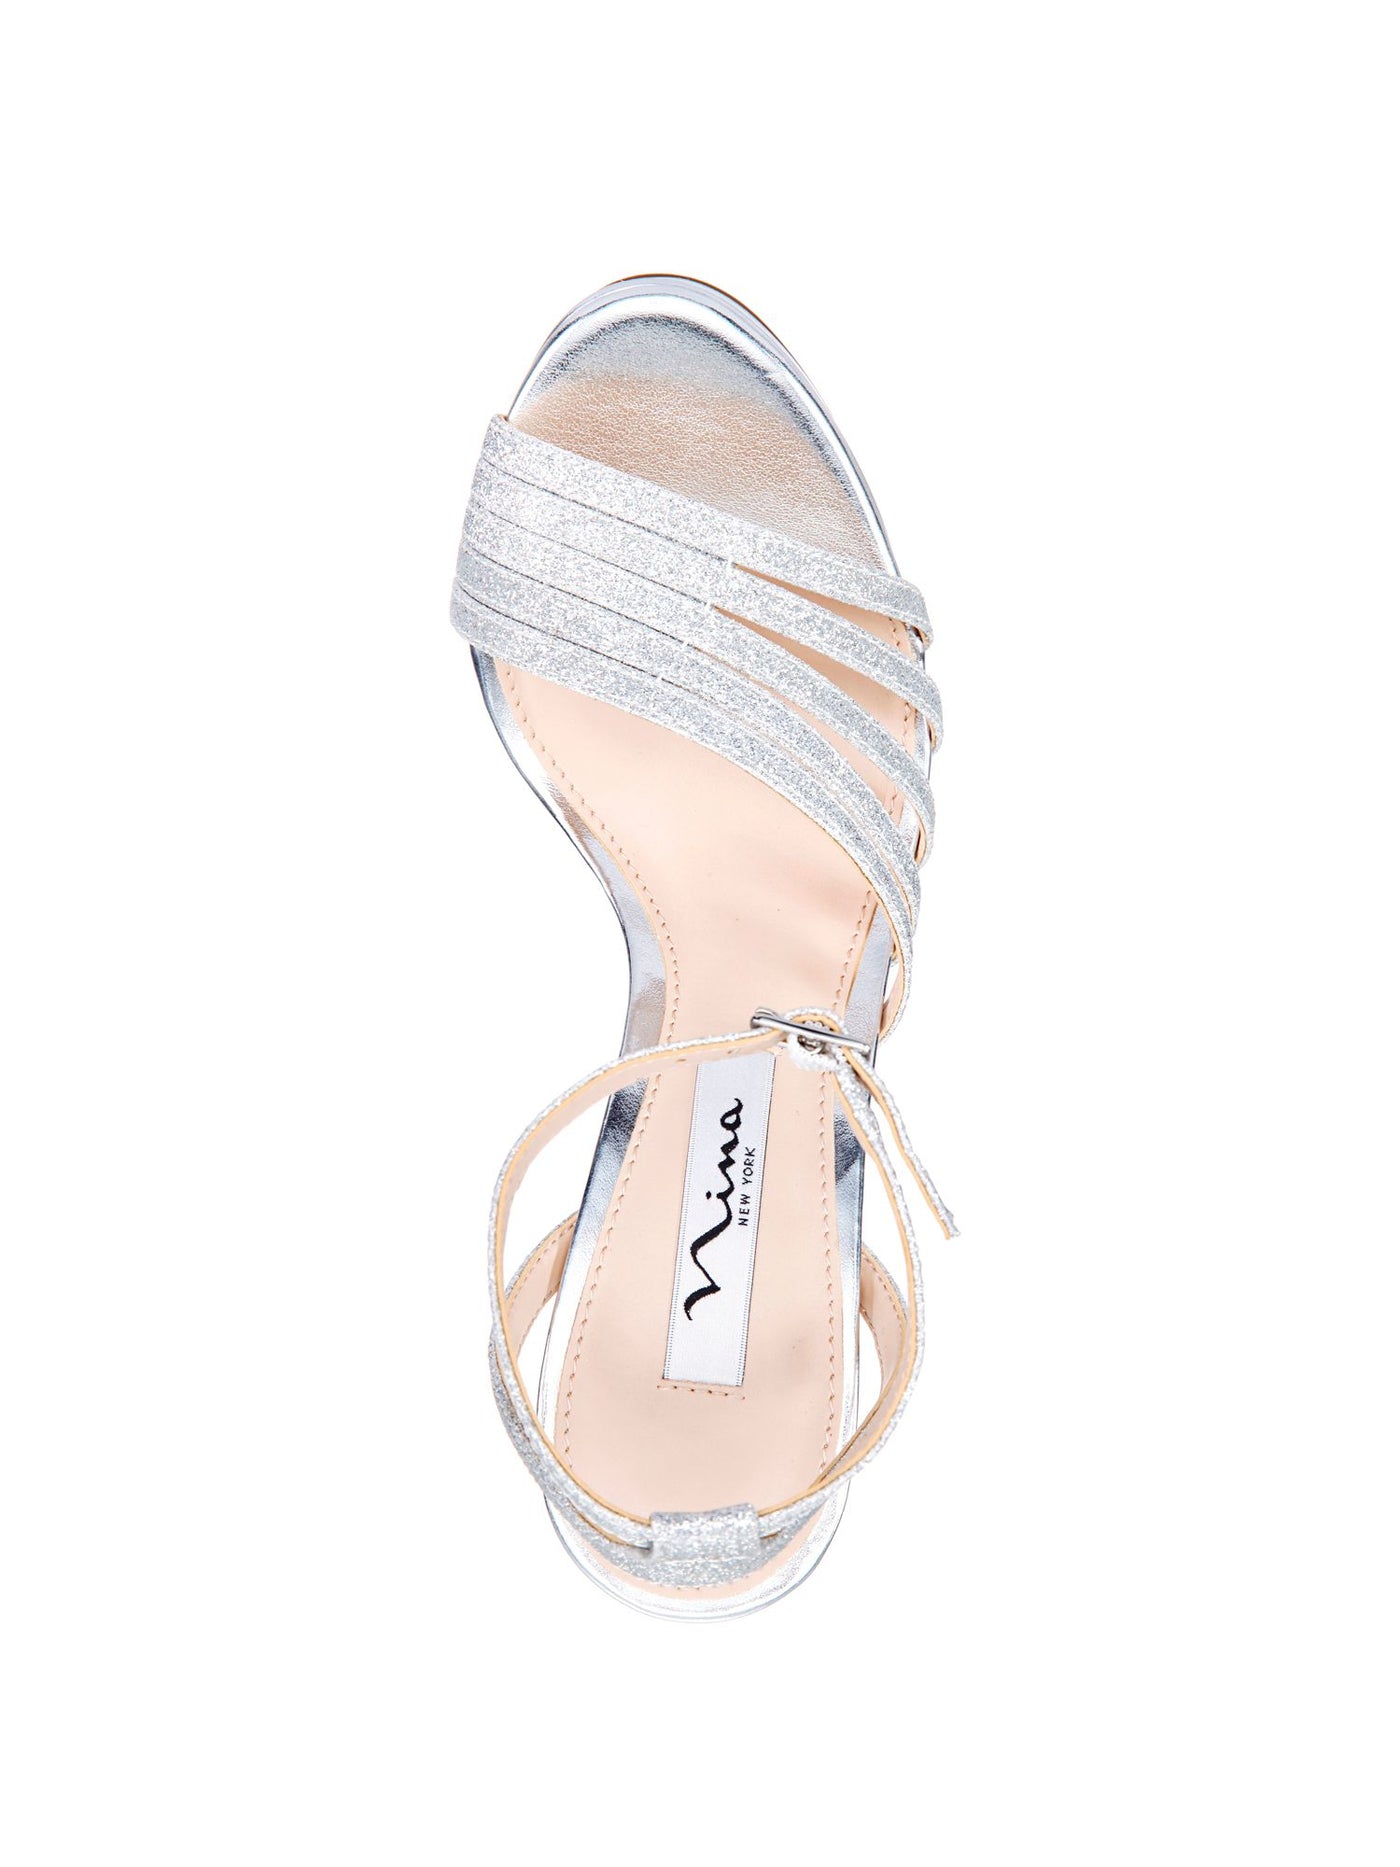 NINA Womens Silver 1 1/4" Platform Strappy Glitter Adjustable Strap Padded Starla Round Toe Stiletto Buckle Dress Sandals Shoes 8.5 M